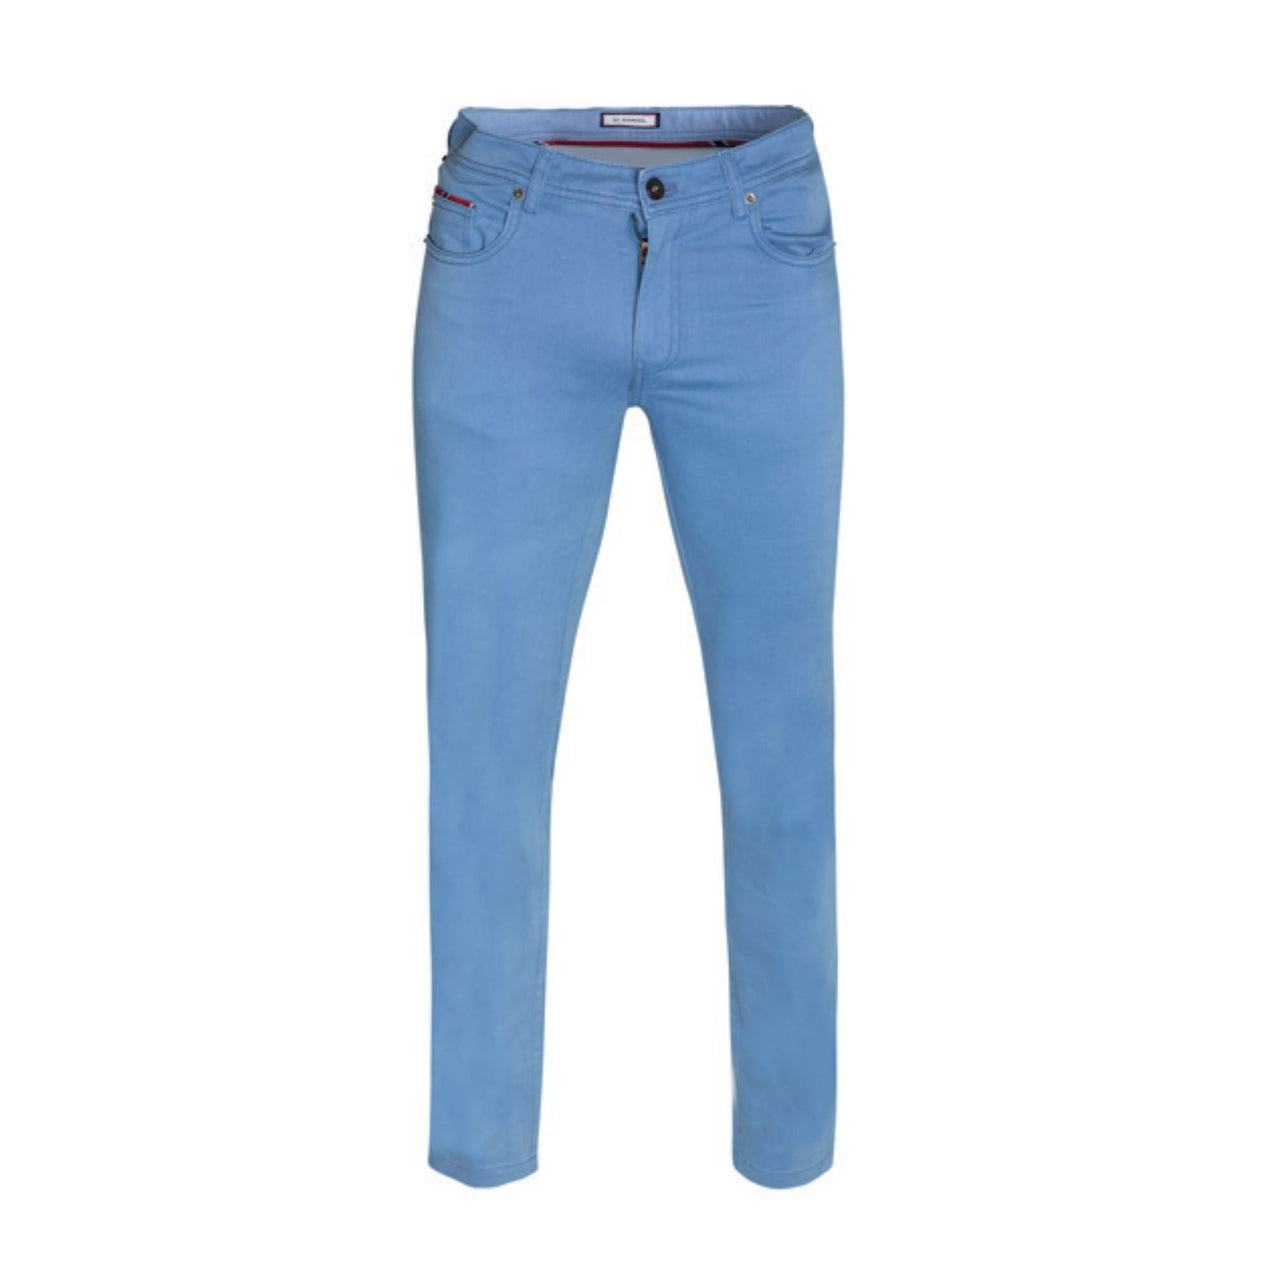 1020S220013 Pantalon el ganso pantalón 5 bolsillos azul - Medina Menswear®